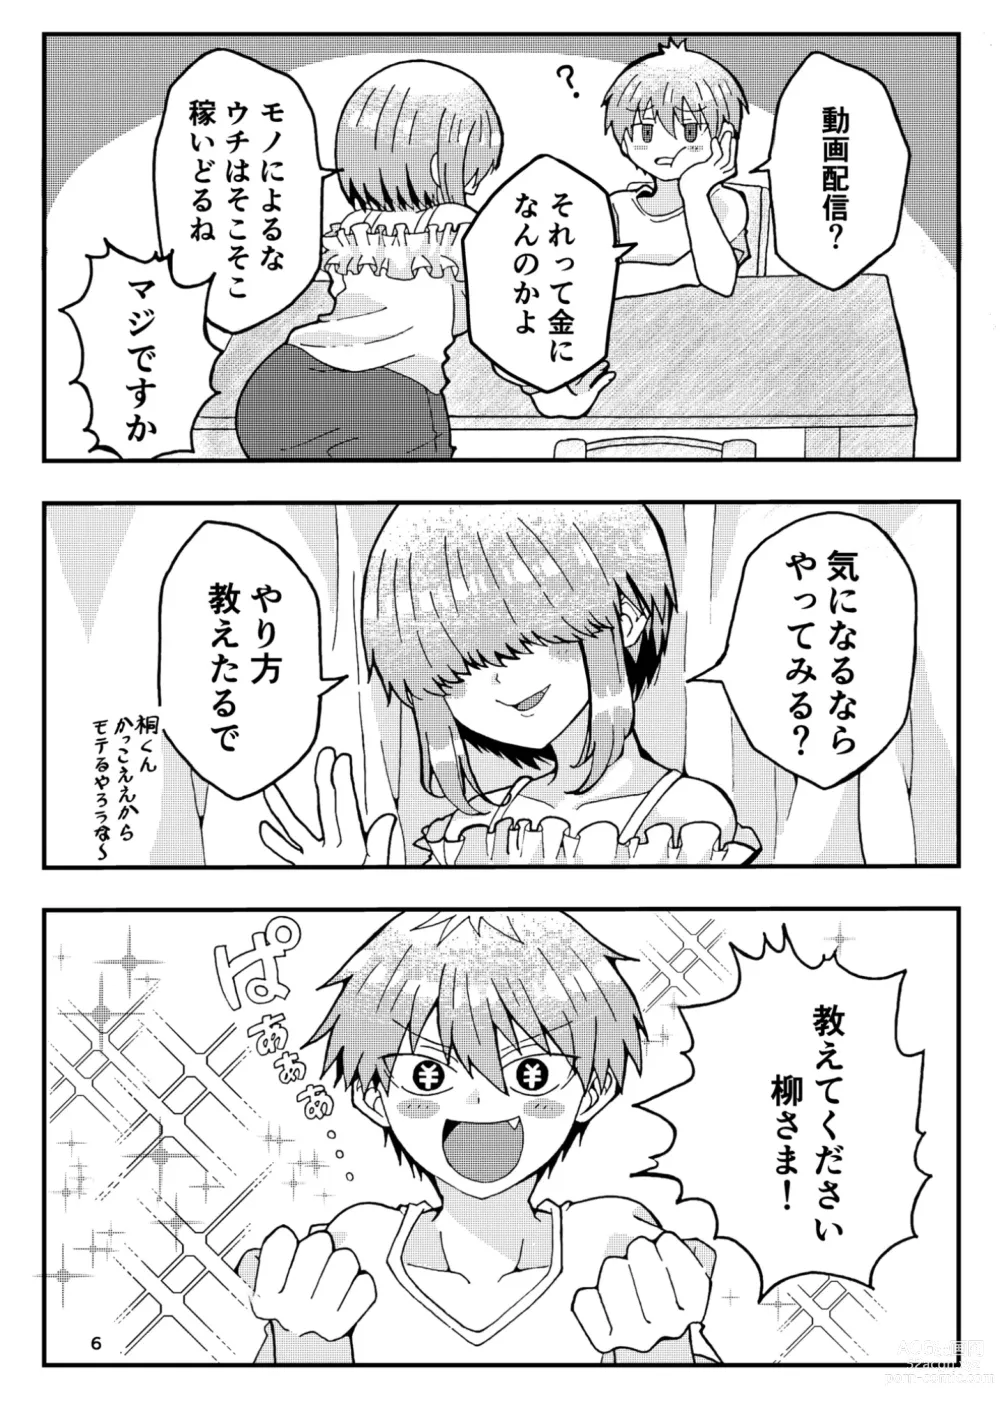 Page 5 of doujinshi Uzaki-kun wa Asobitai!